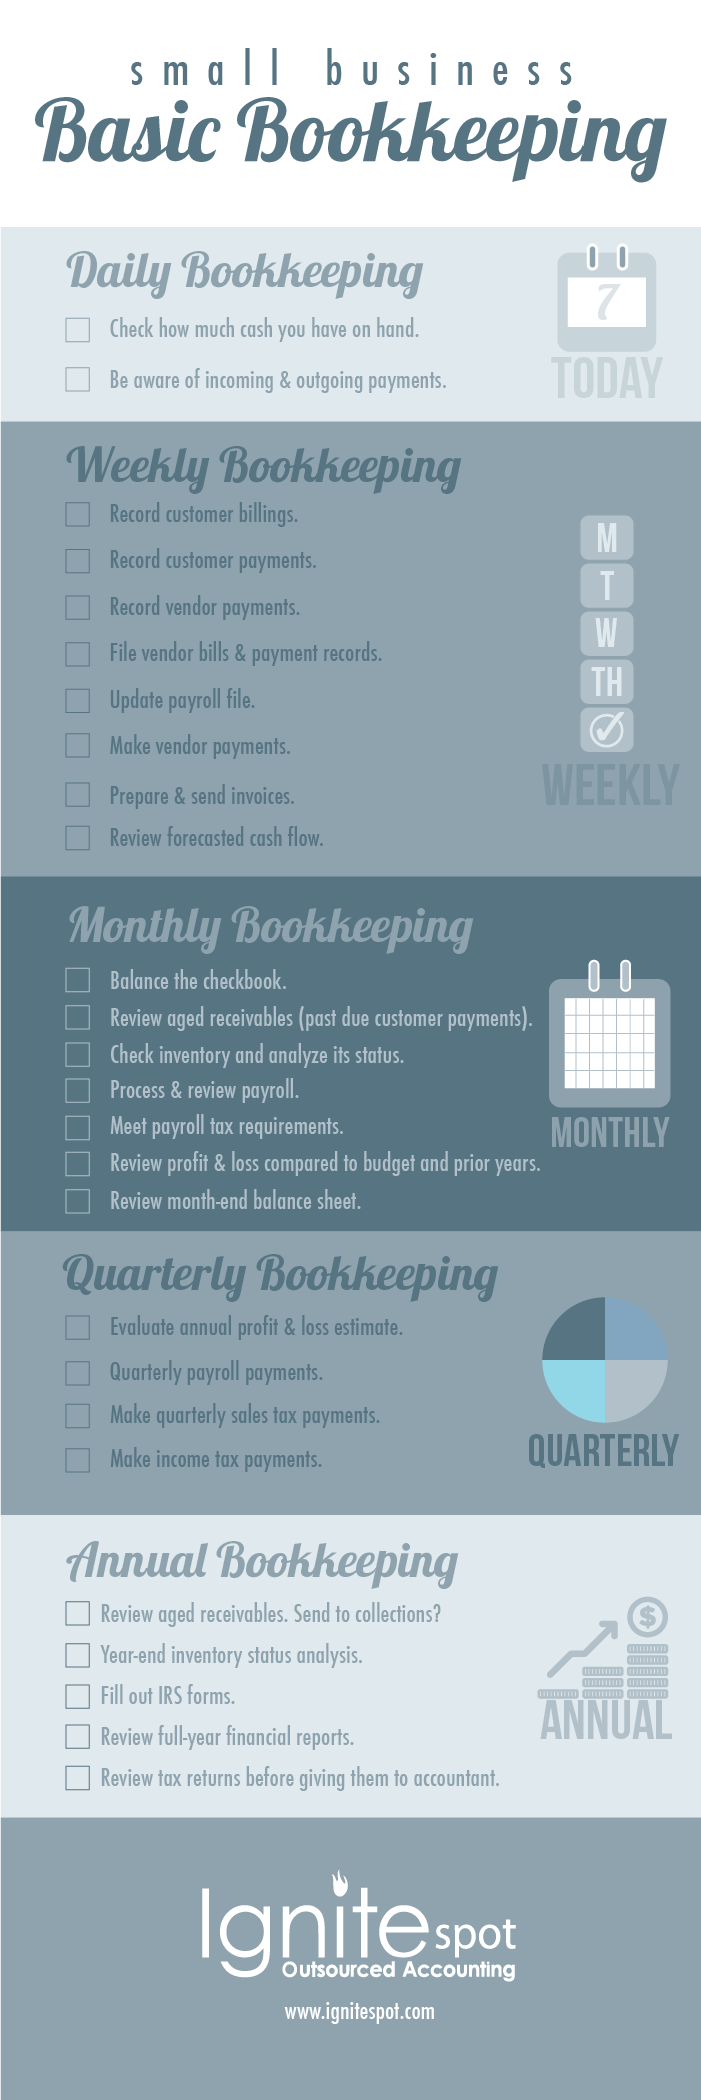 Top 3 Bookkeeper Requirements